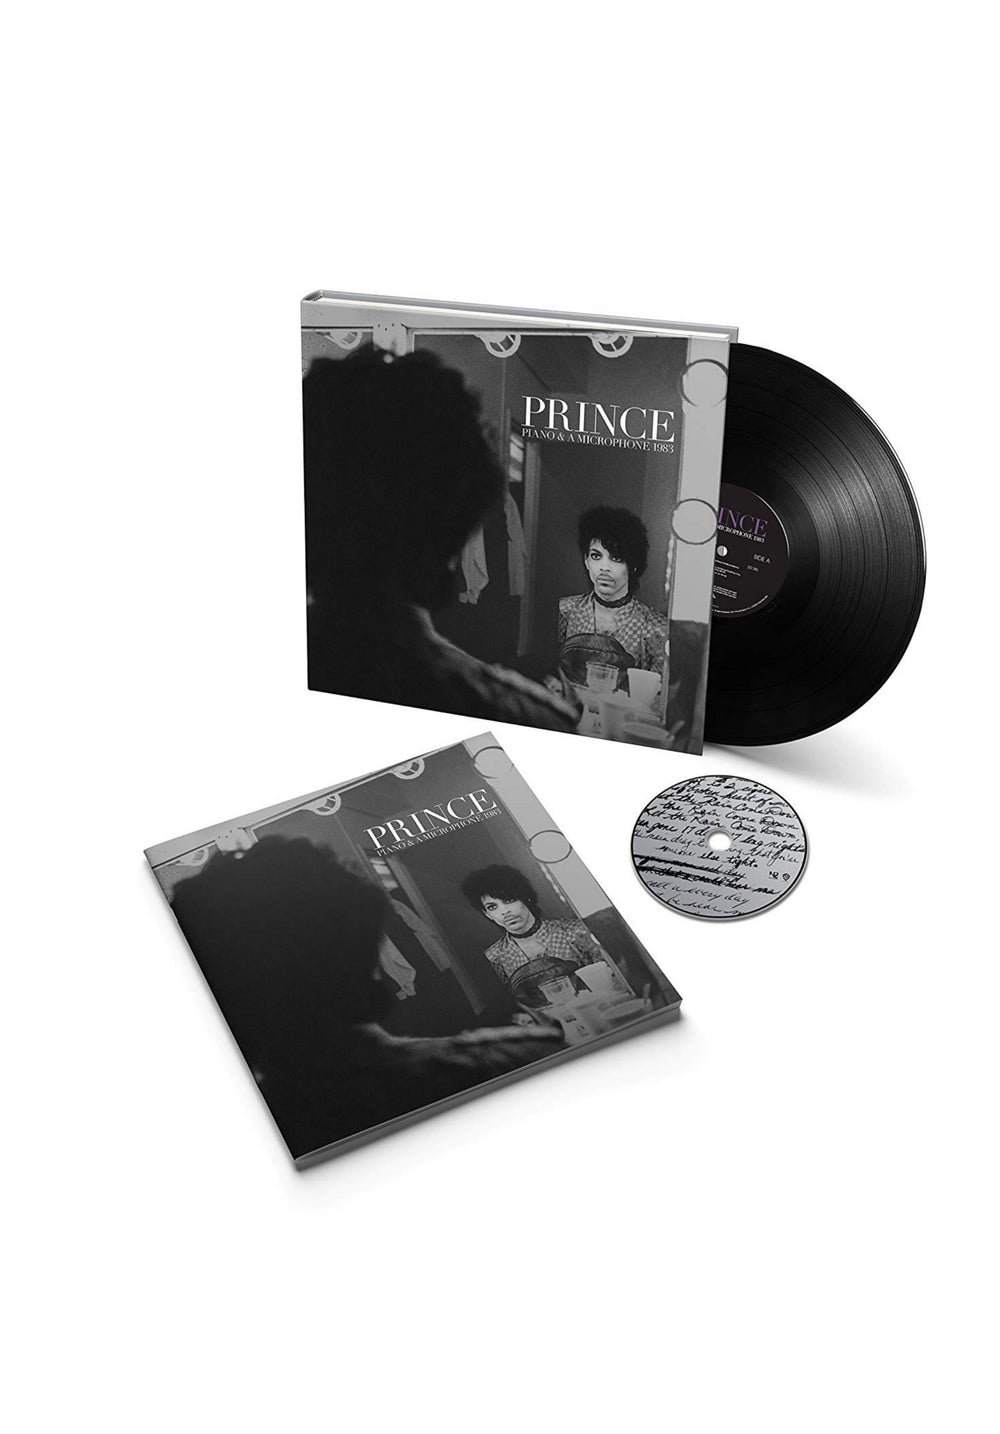 Prince – Piano & A Microphone 1983 Hardback CD Album & Vinyl Album & Print 2019